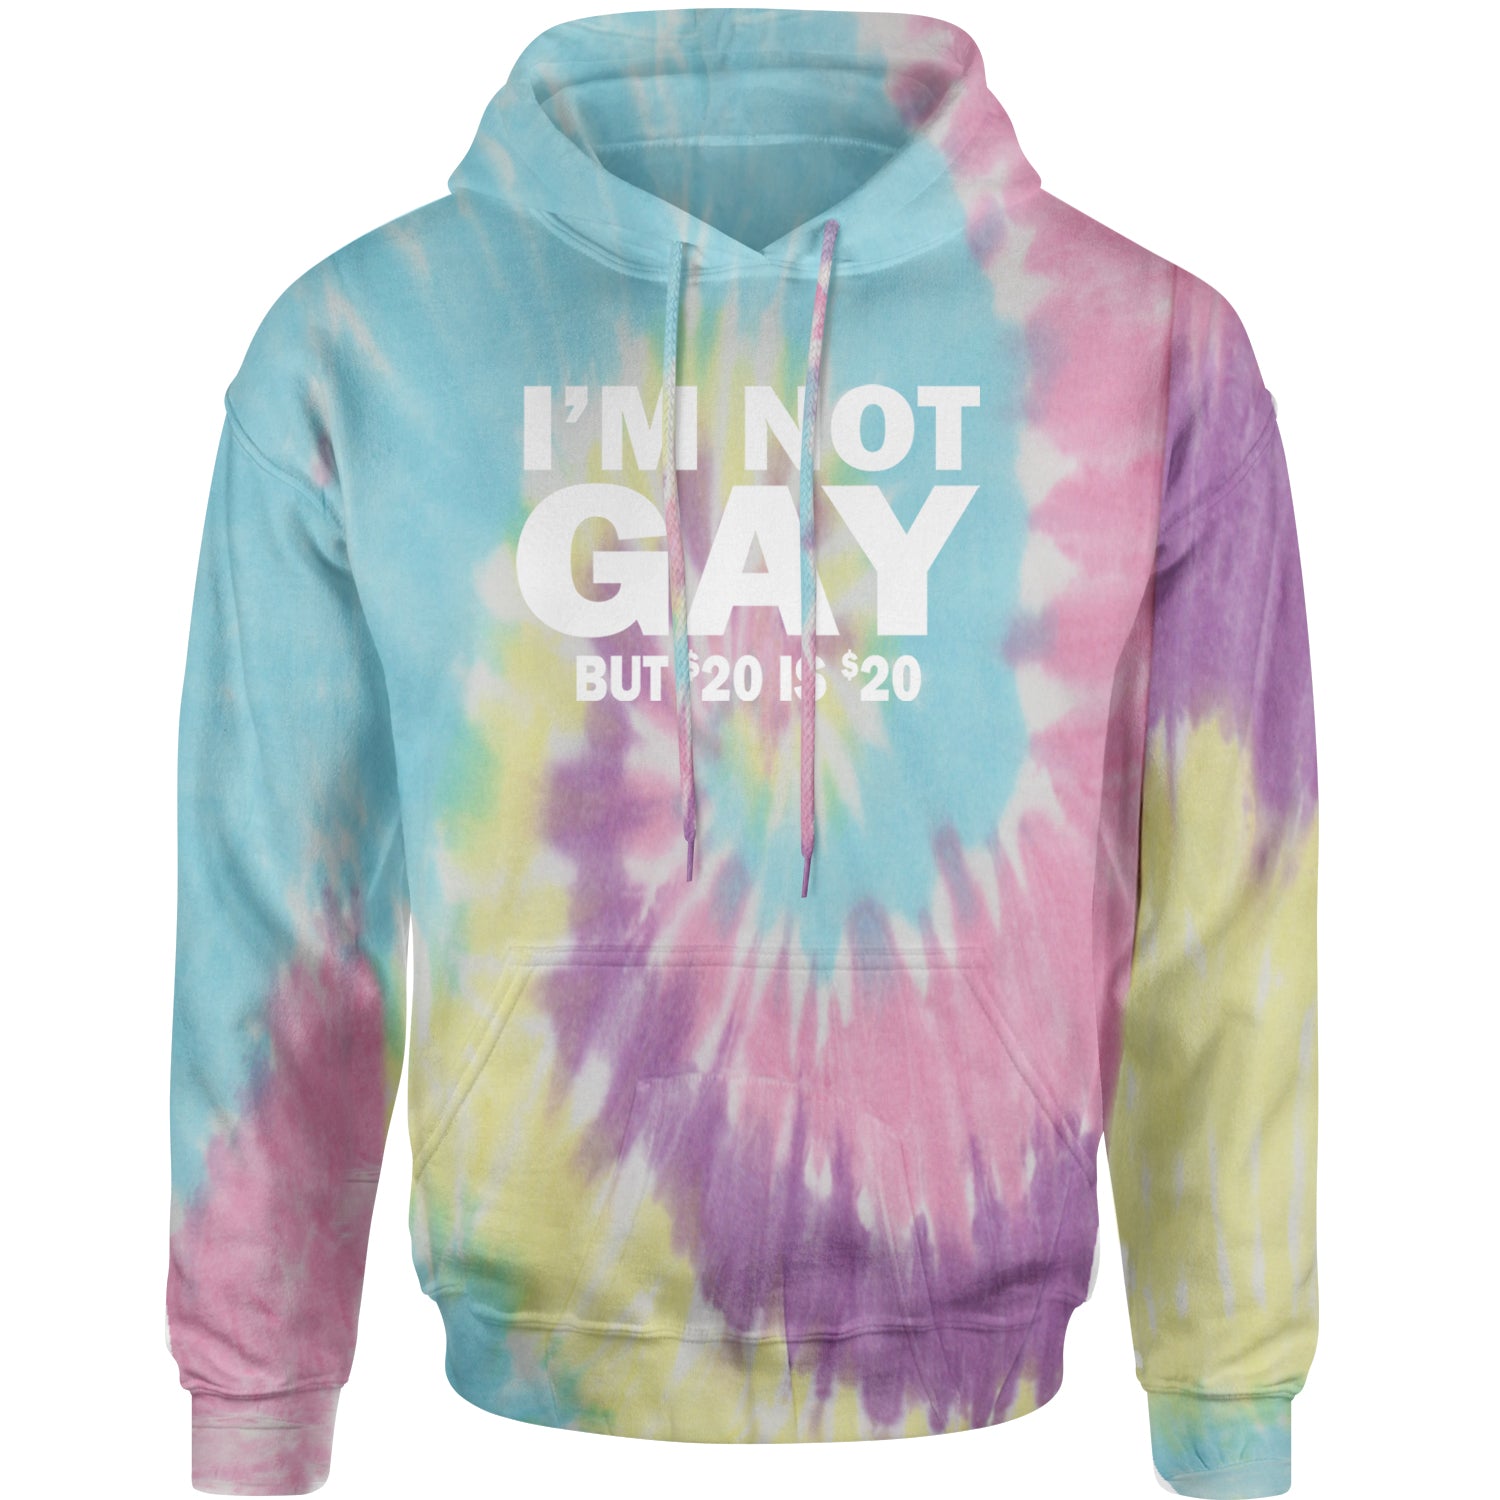 I'm Not Gay, But $20 Bucks is $20 Bucks Adult Hoodie Sweatshirt